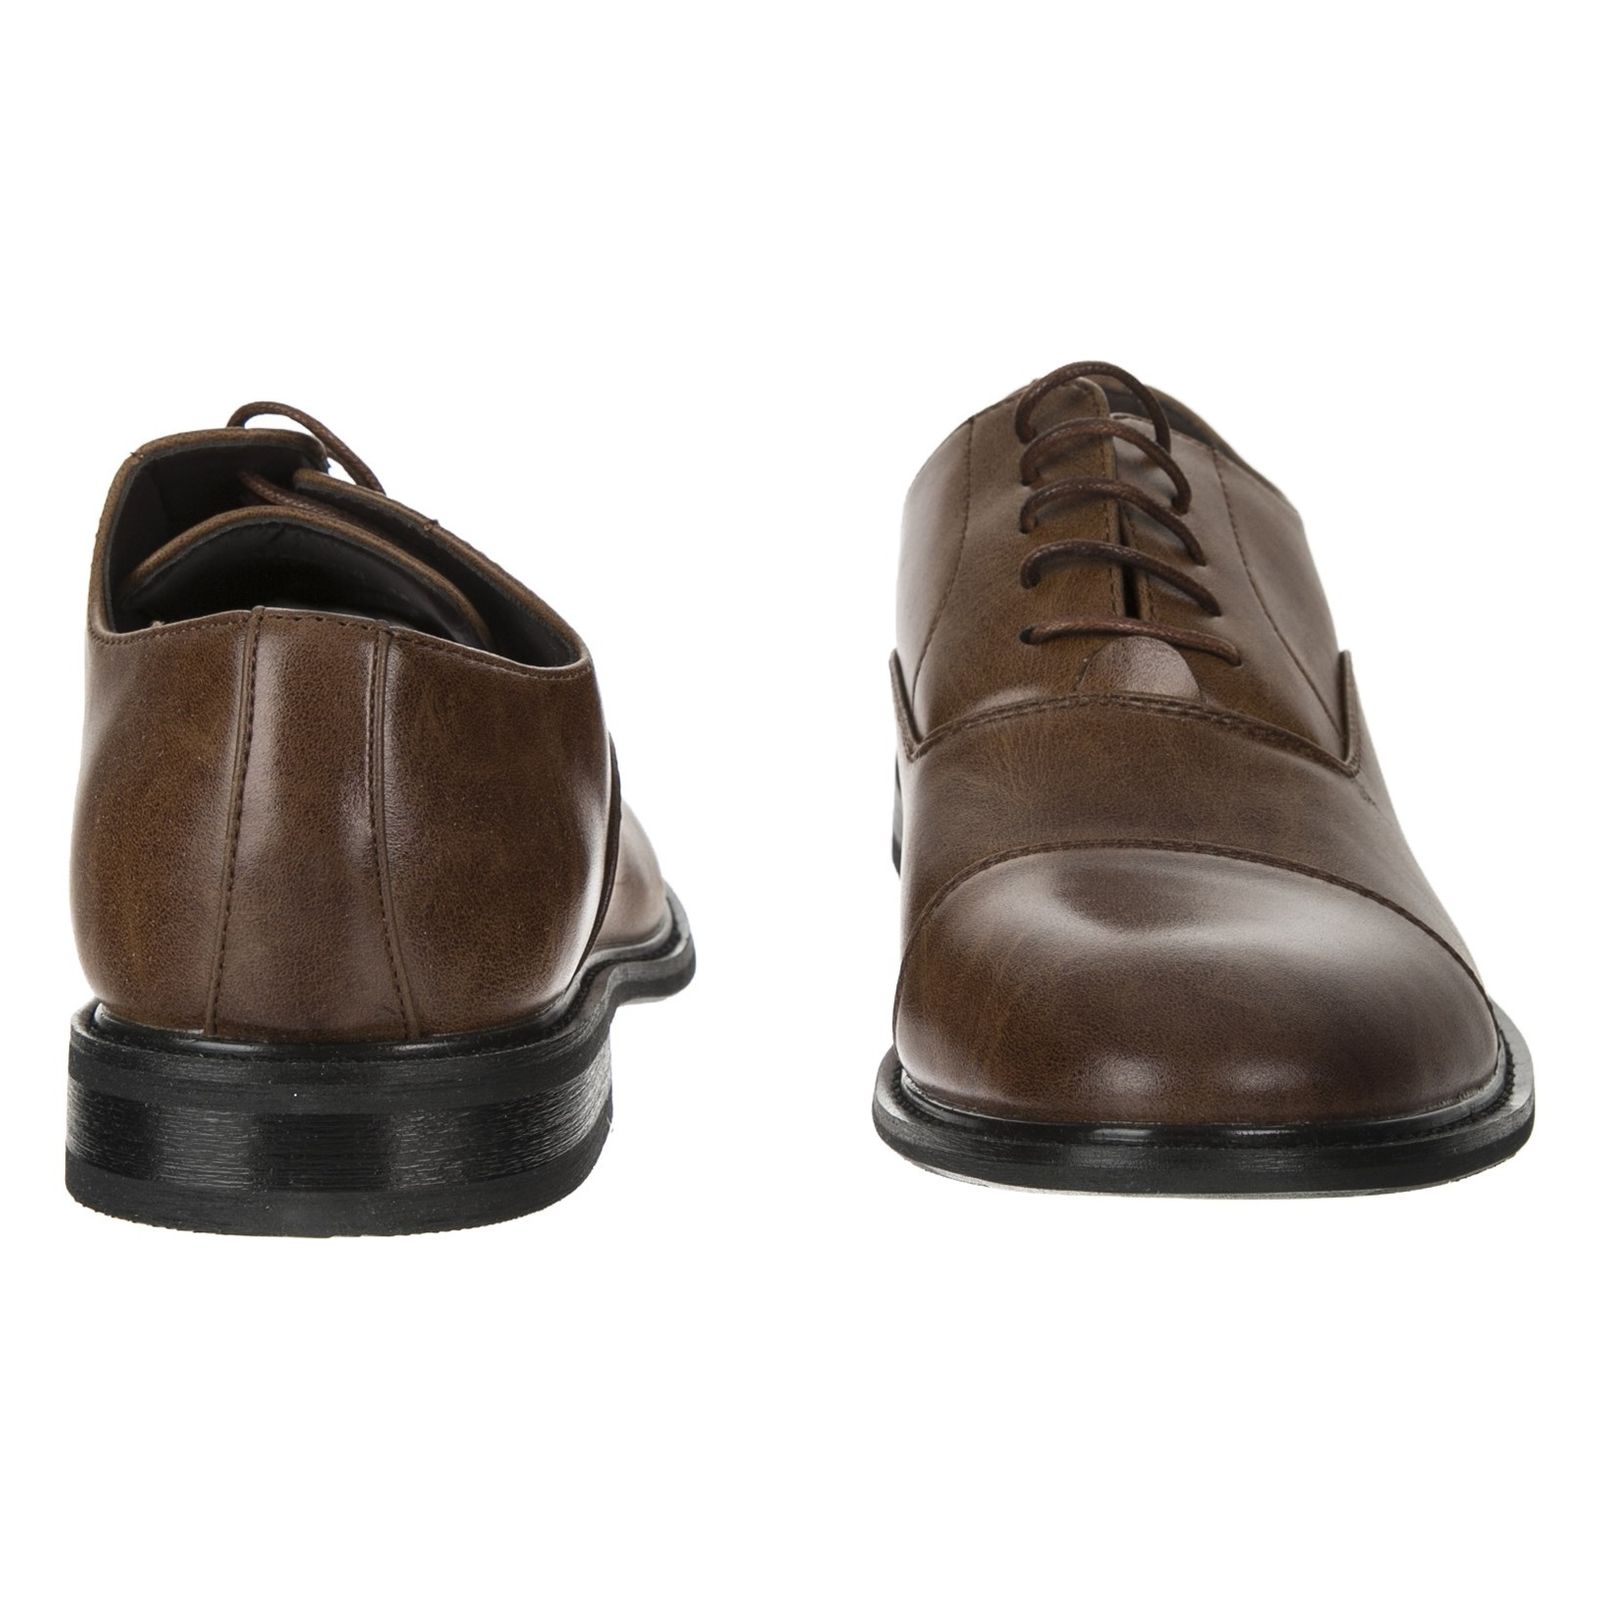 کفش رسمی مردانه - گرادلا - قهوه اي روشن - 6